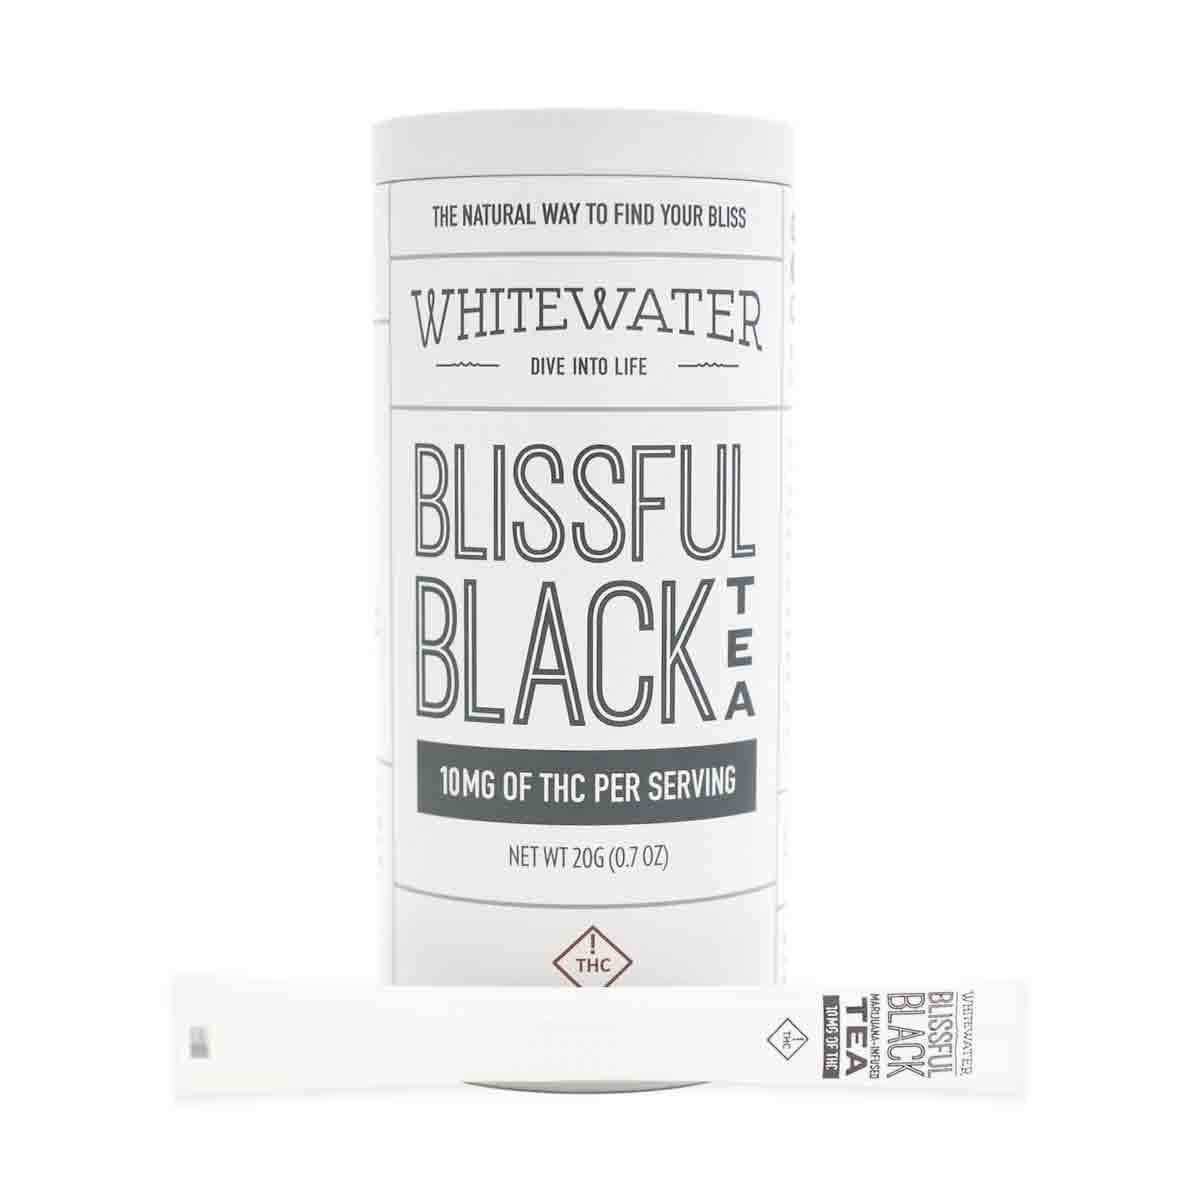 Whitewater Blissful Black, 10mg